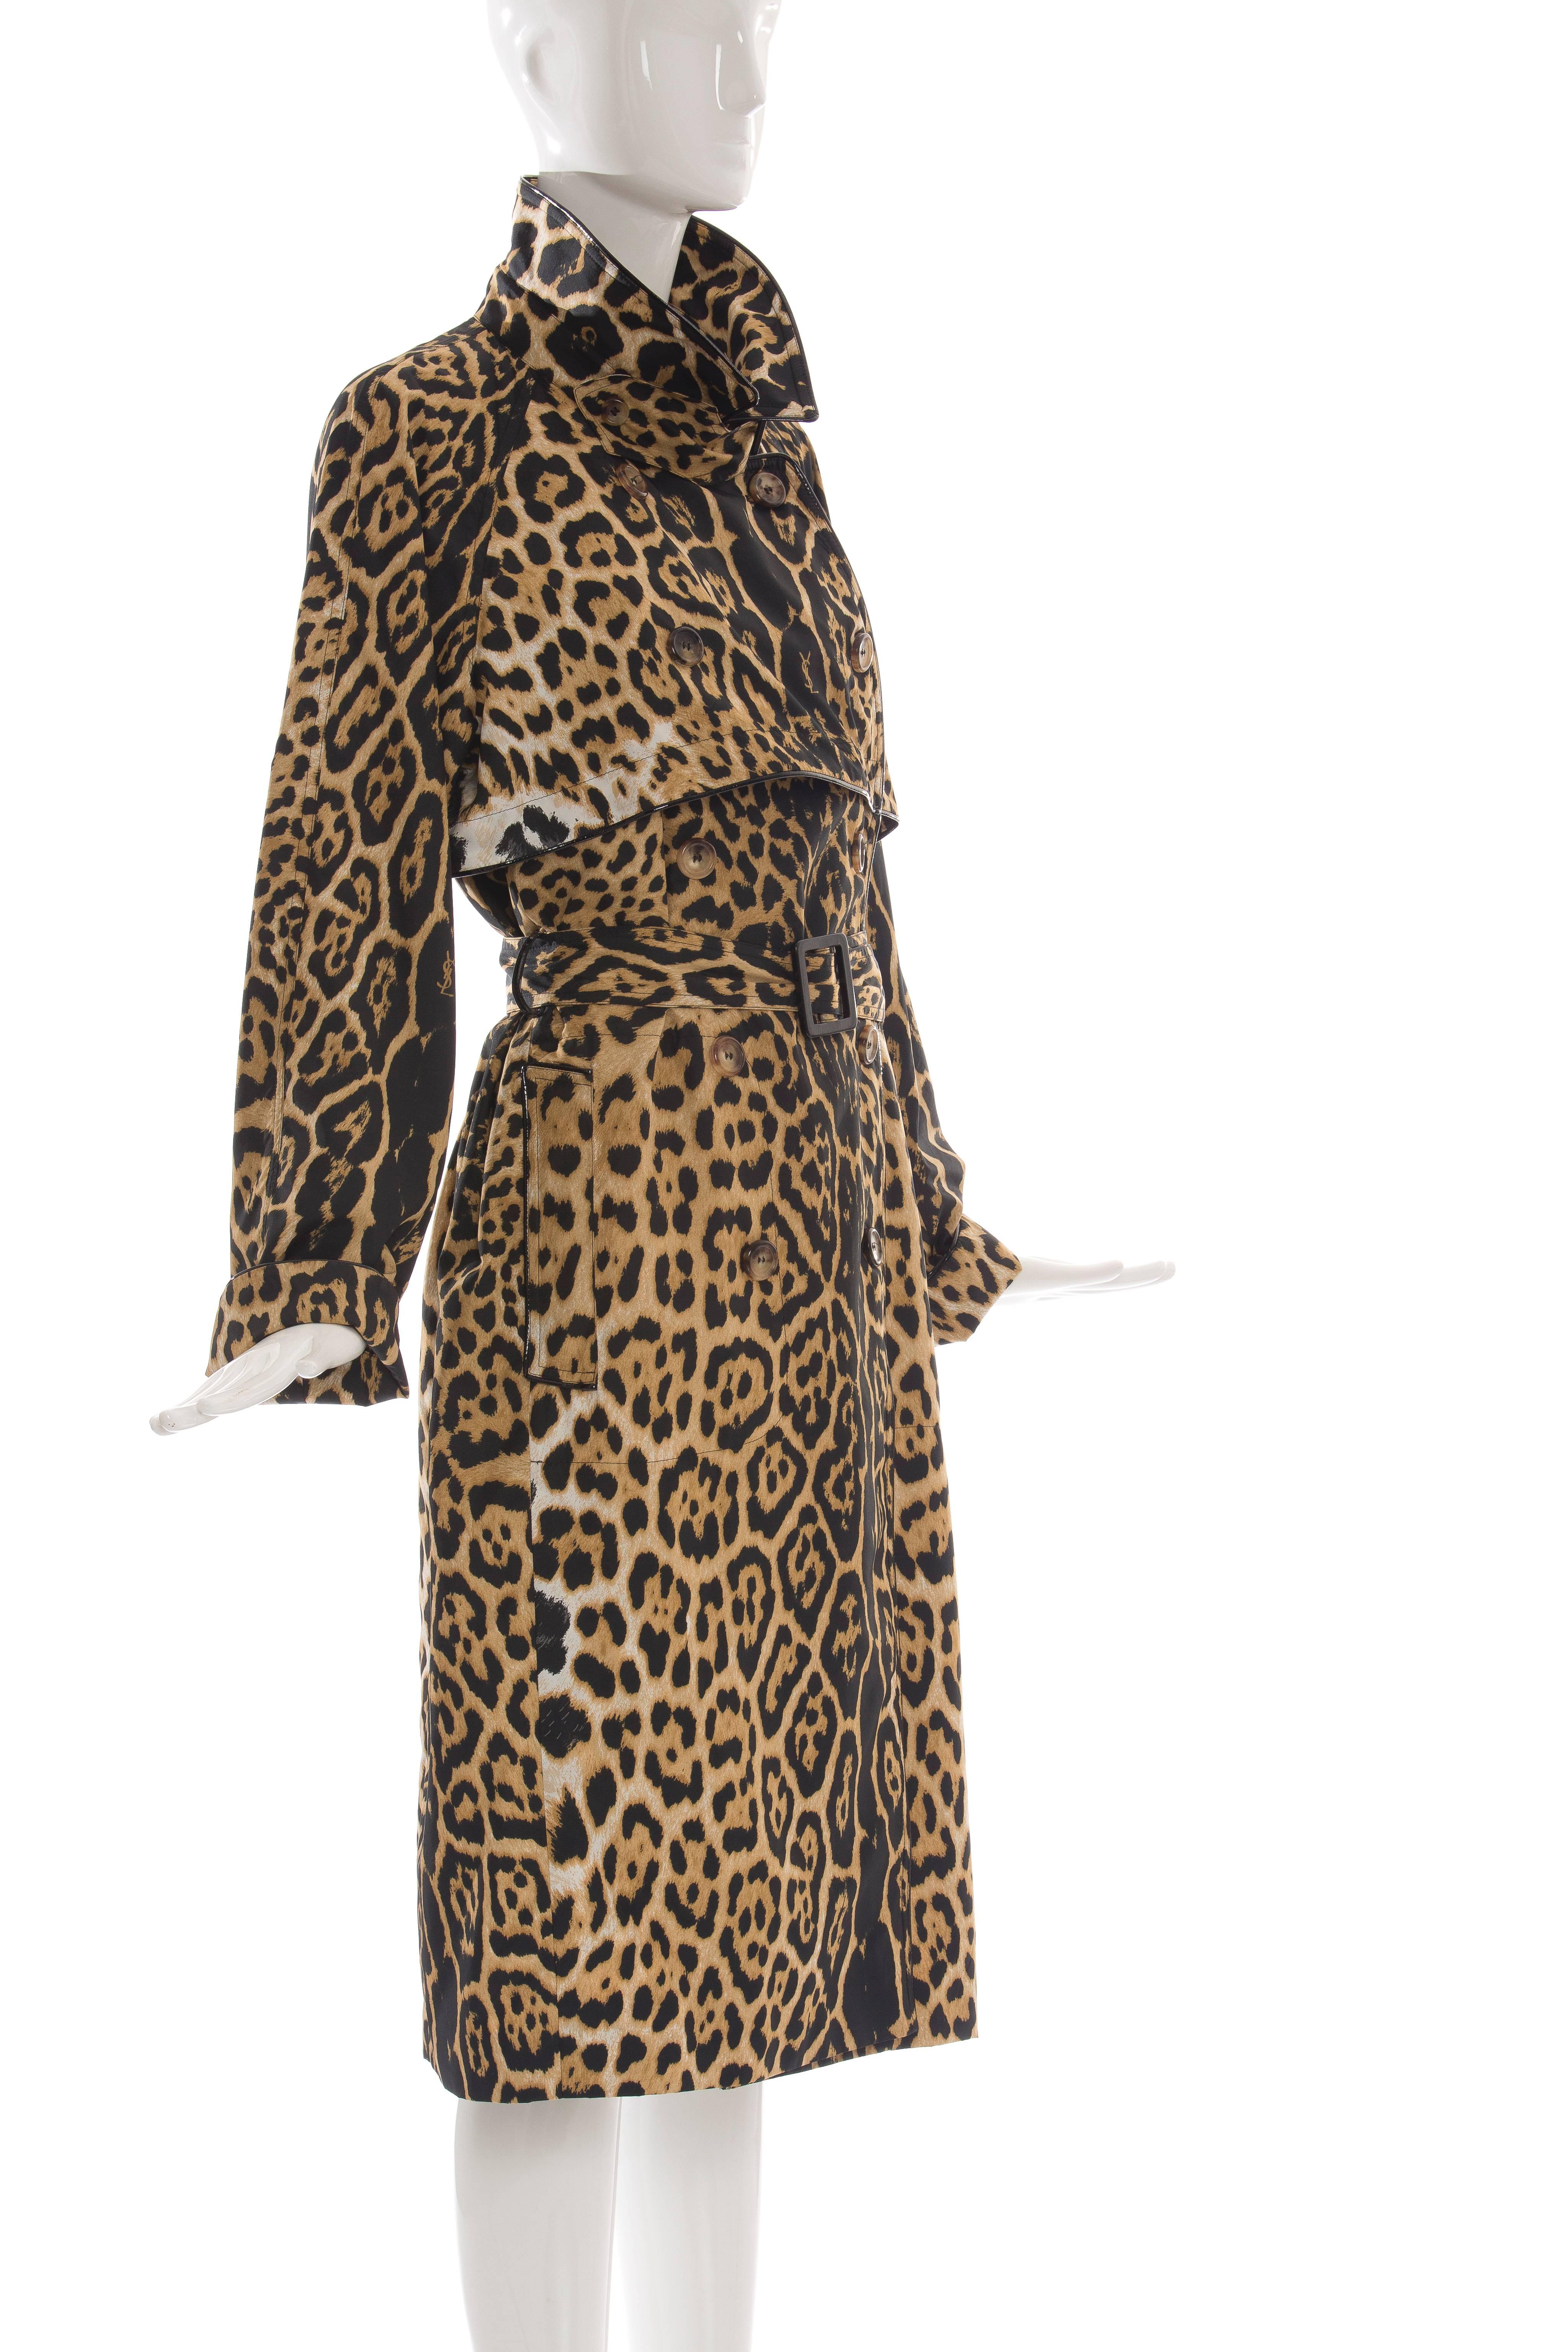 Women's Yves Saint Laurent By Stefano Pilati Leopard Trench Coat, Circa 2005